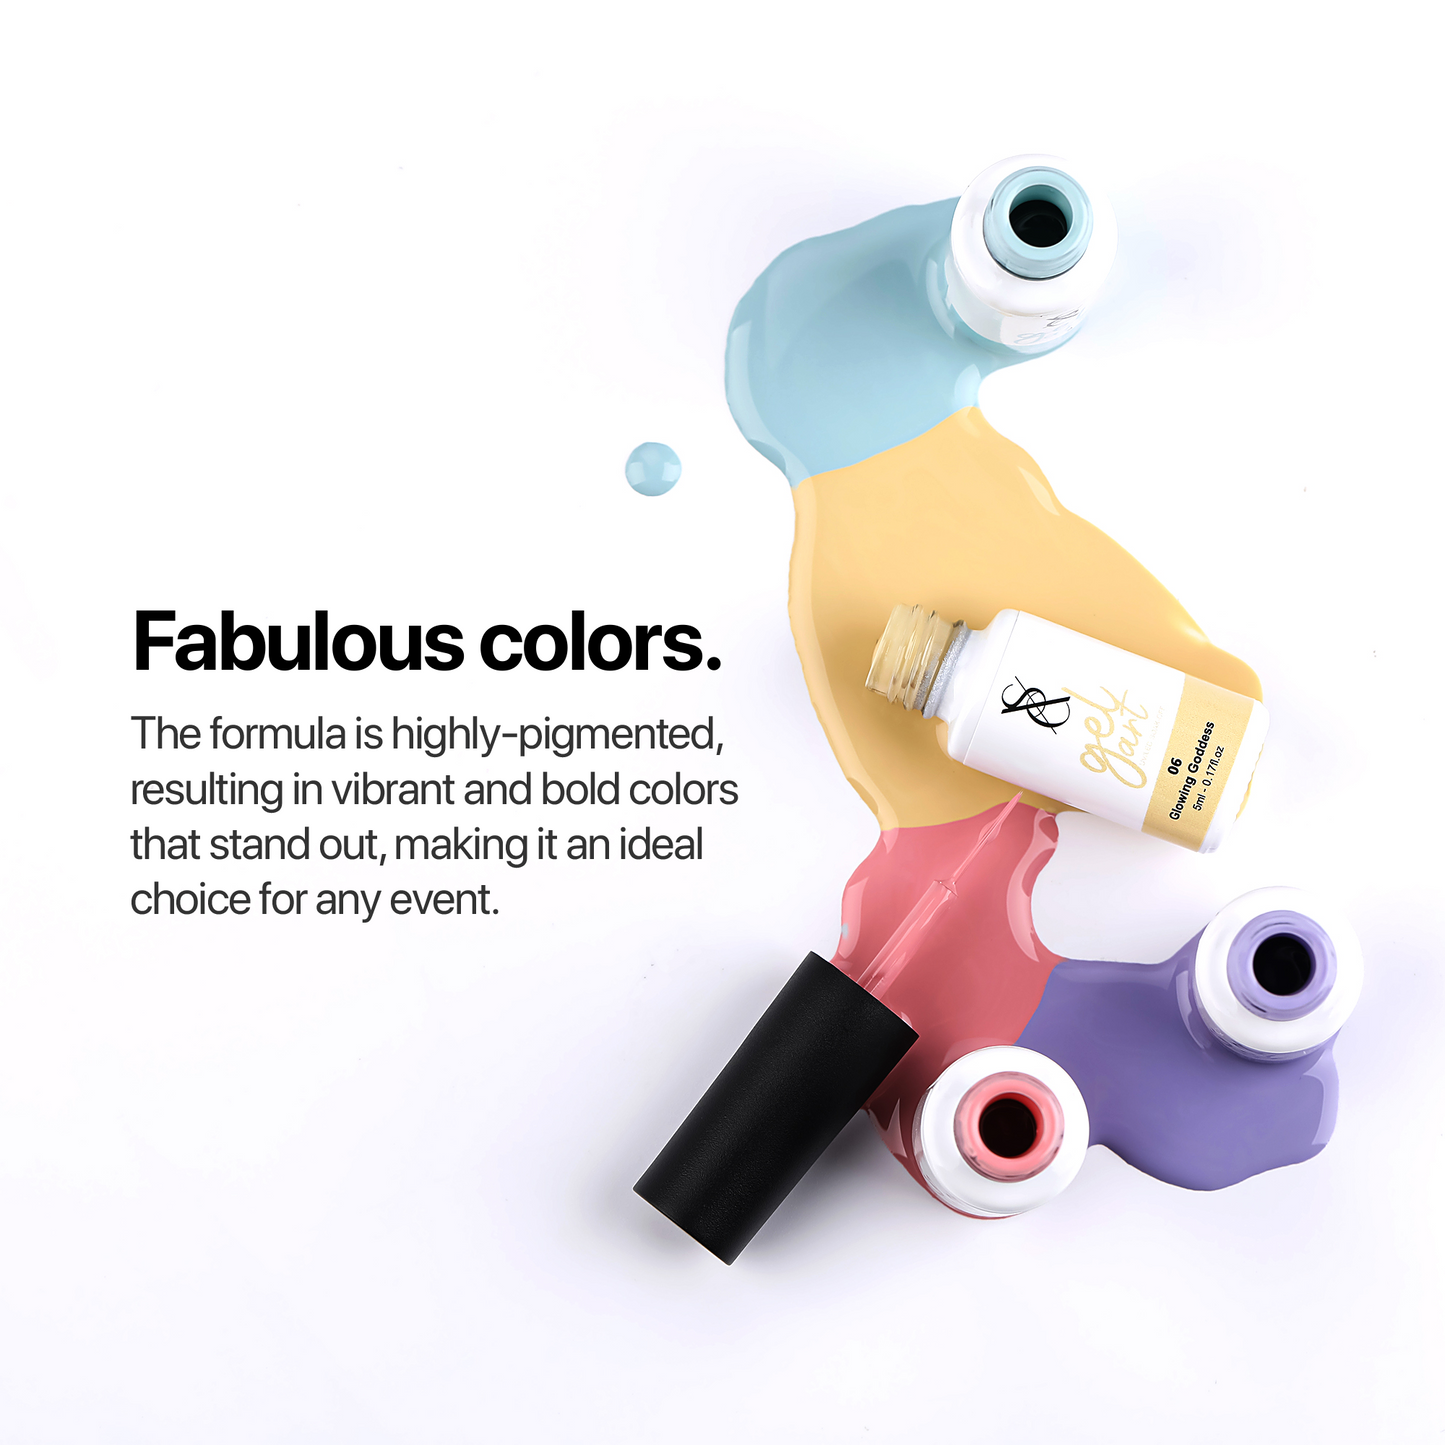 SXC Cosmetics 60 Ultra Color Gel Liner Nail Art Polish Set Colorverse Series